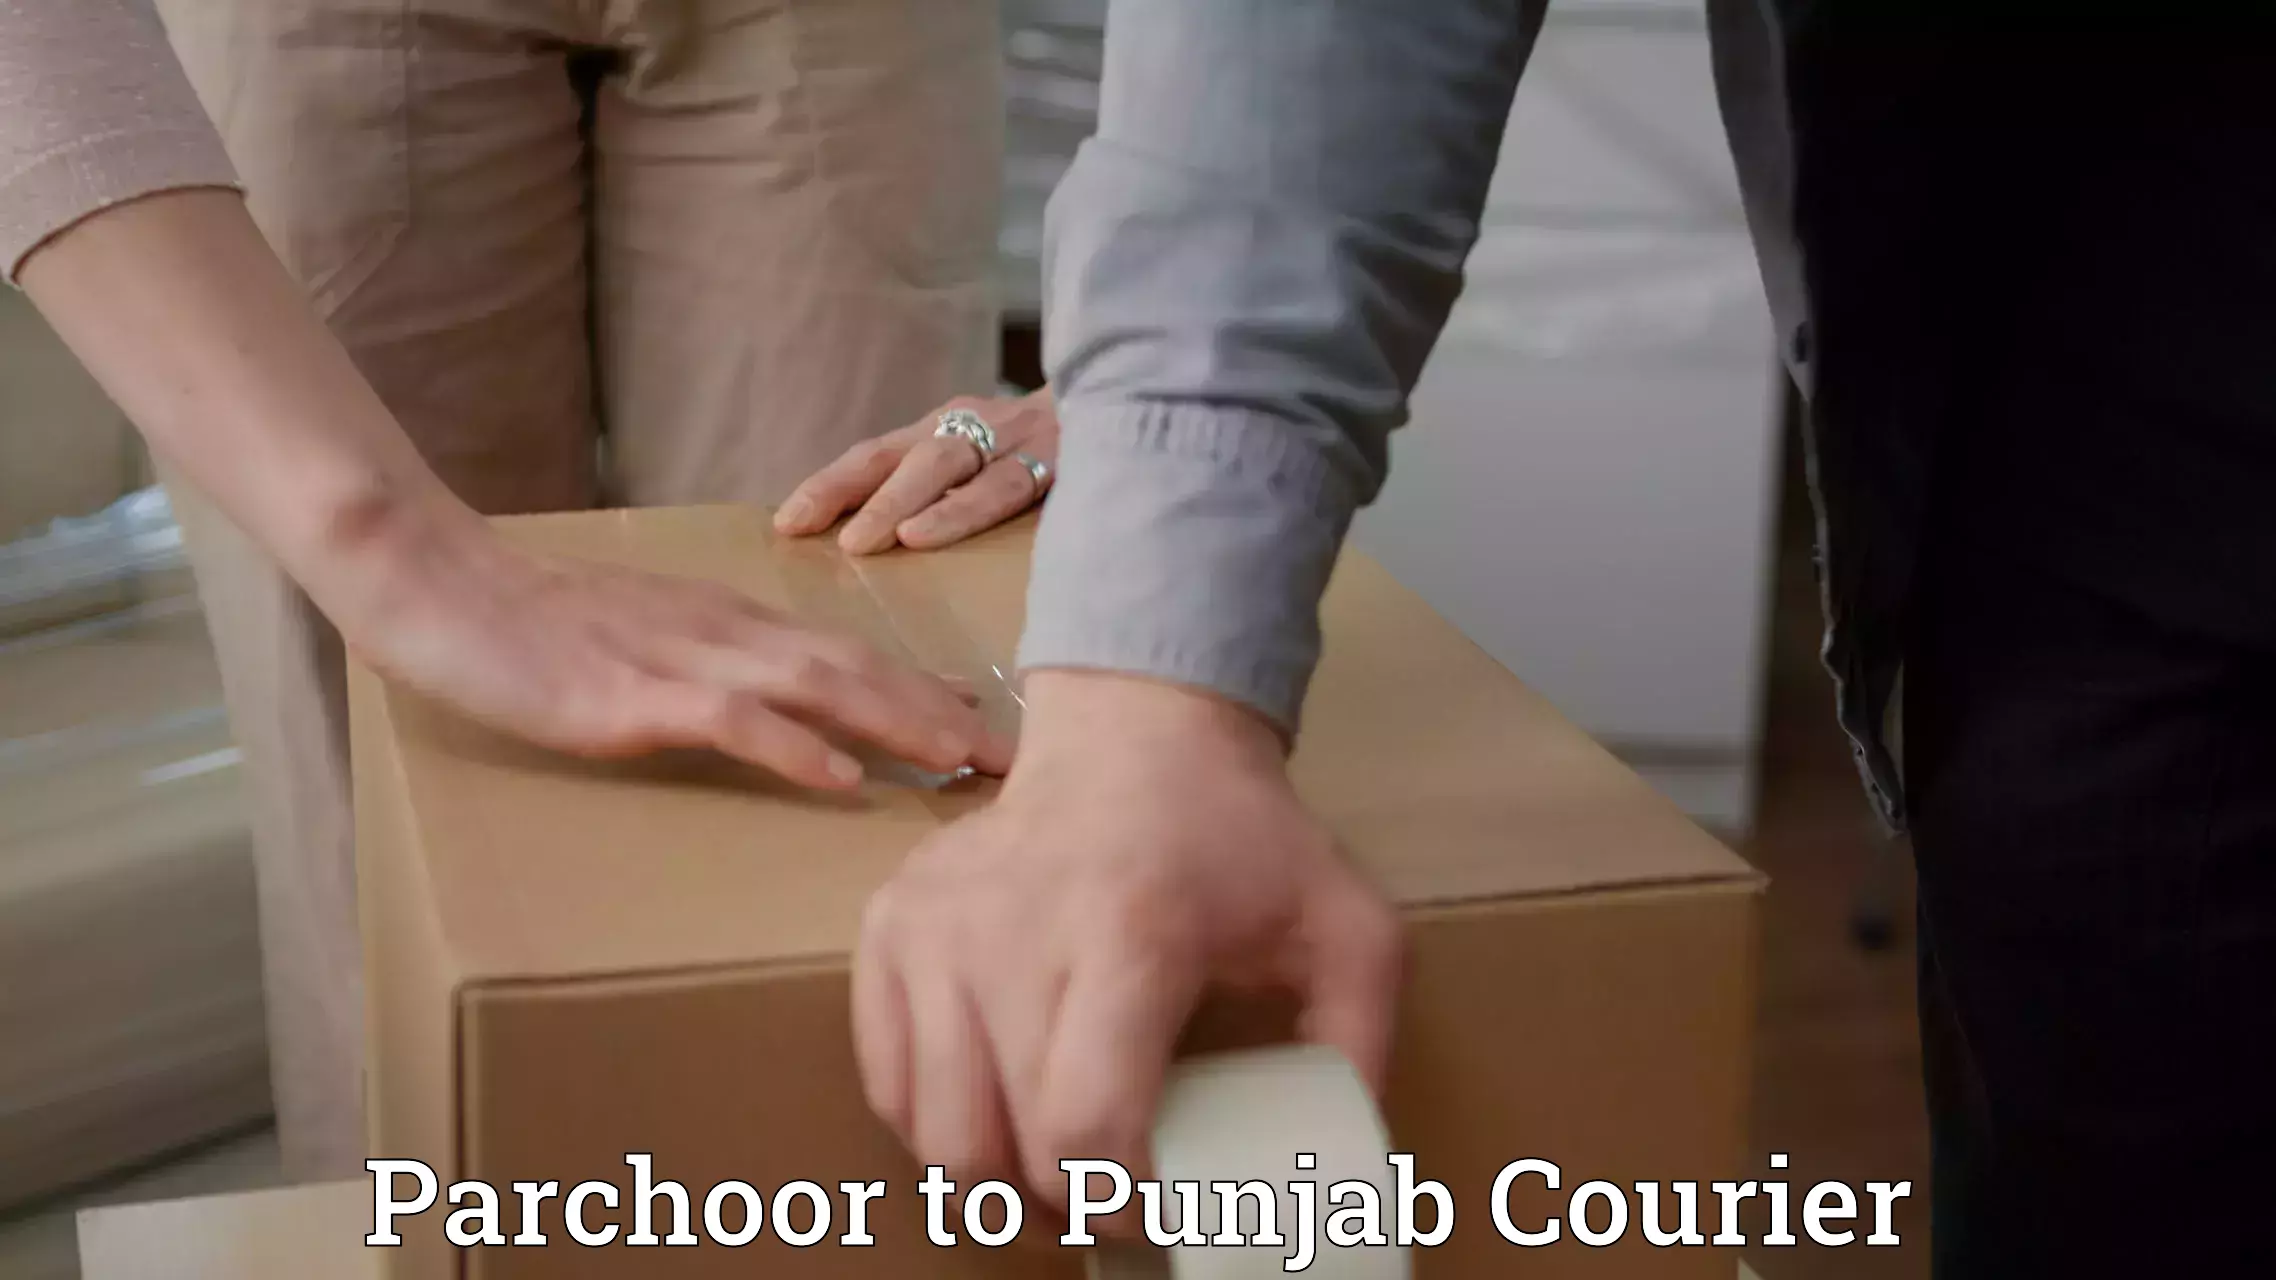 User-friendly delivery service Parchoor to Fatehgarh Sahib